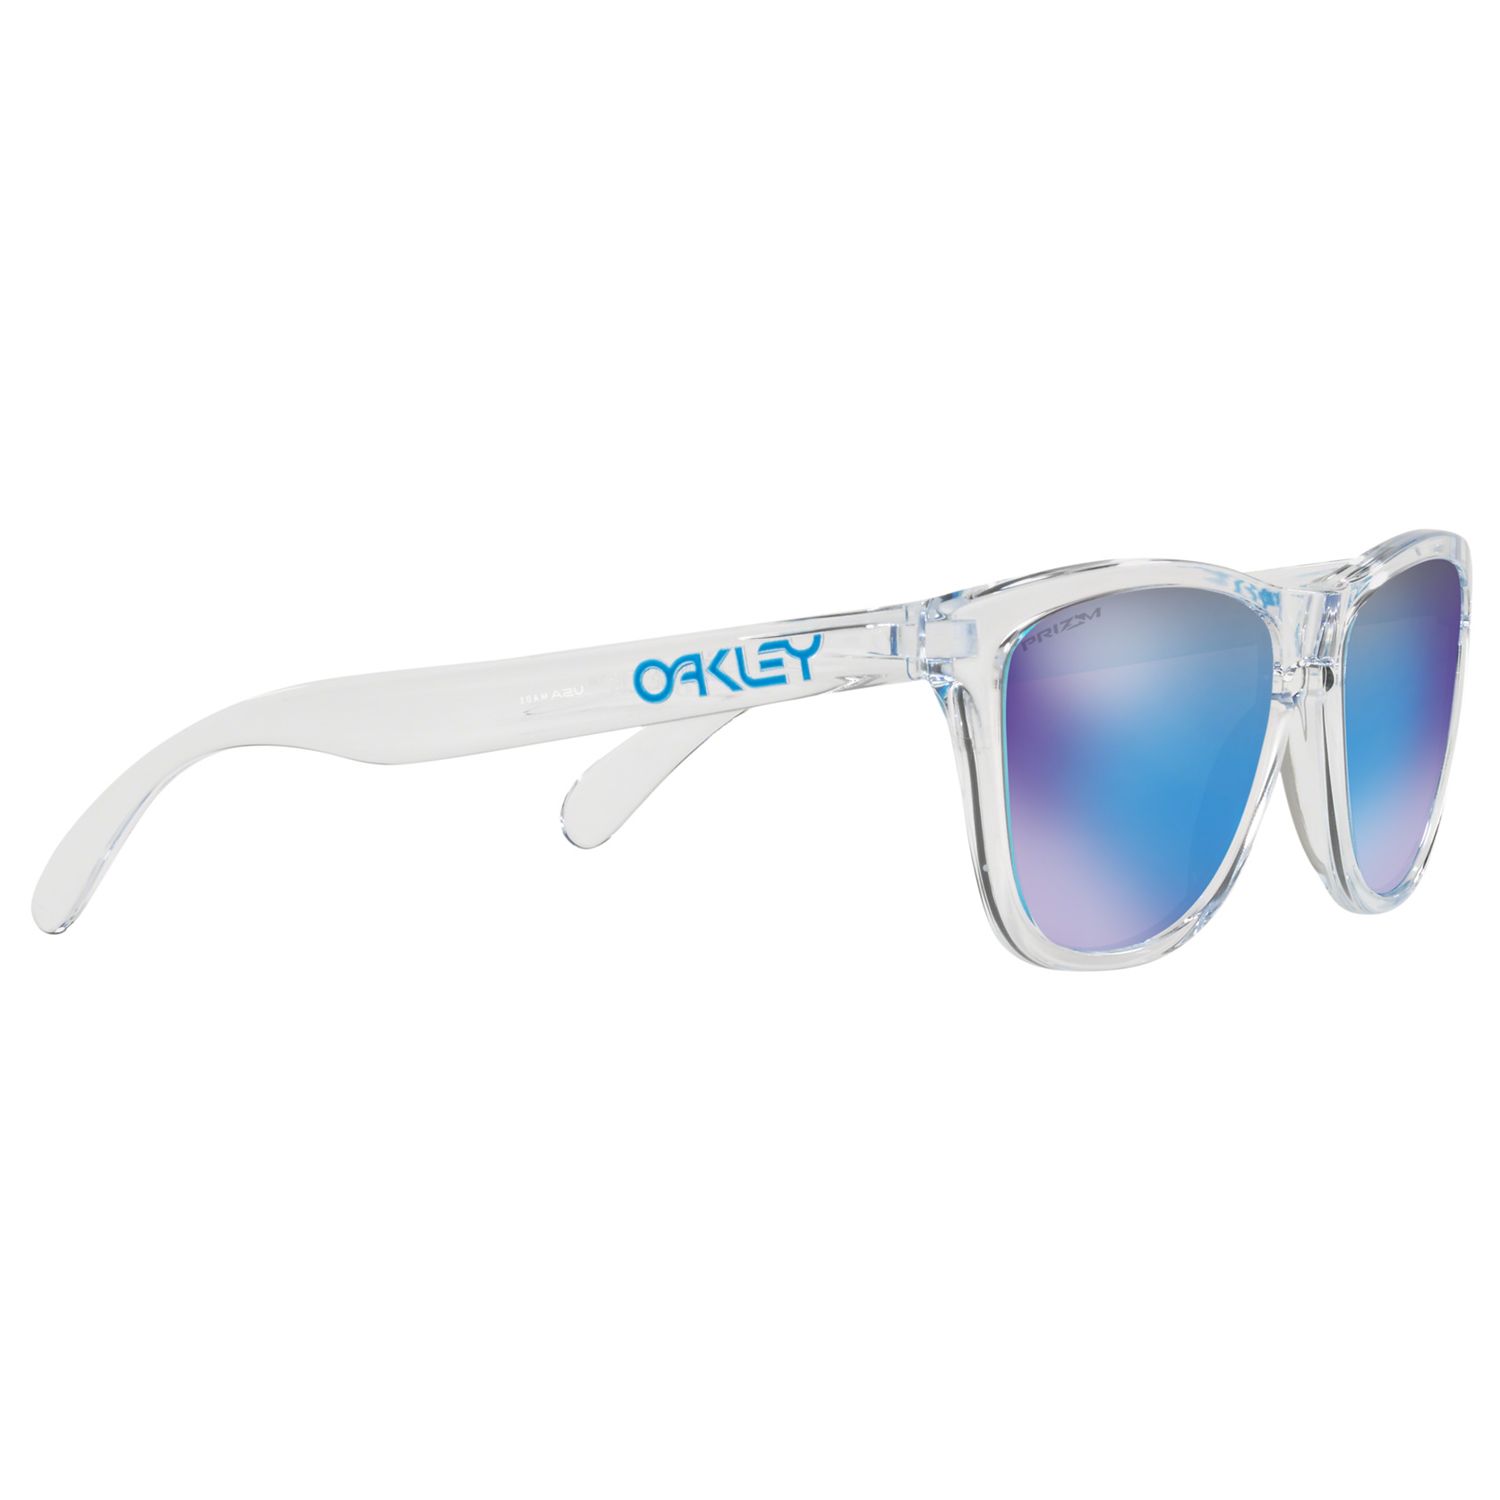 Oakley OO9013 Men's Frogskins Prizm Square Sunglasses, Clear/Iridium  Sapphire at John Lewis & Partners